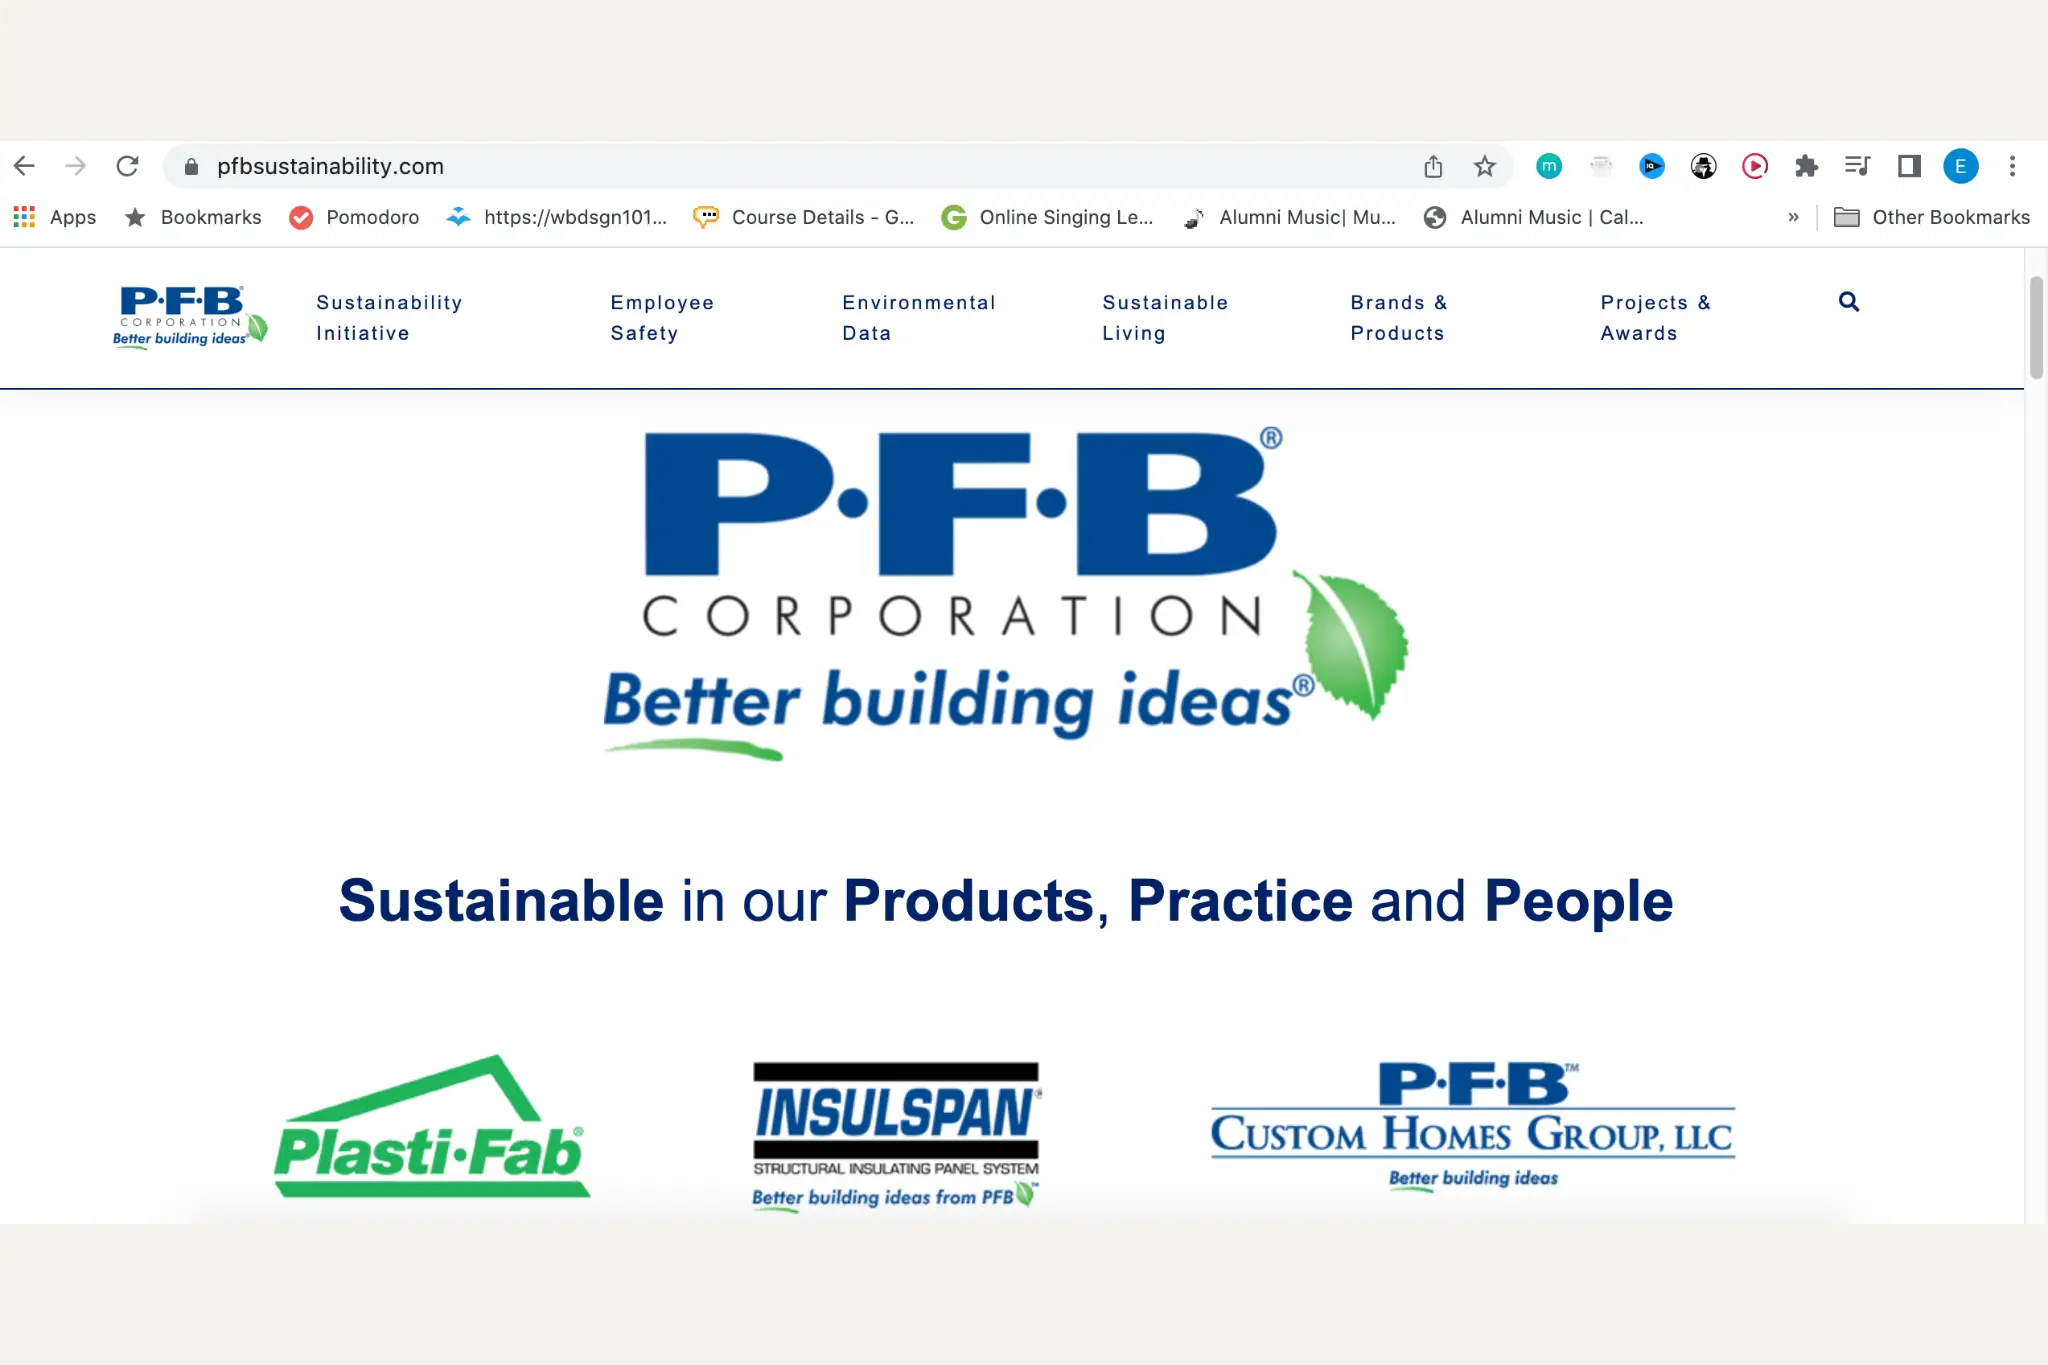 Landing Page Content - P.F.B. Corporation